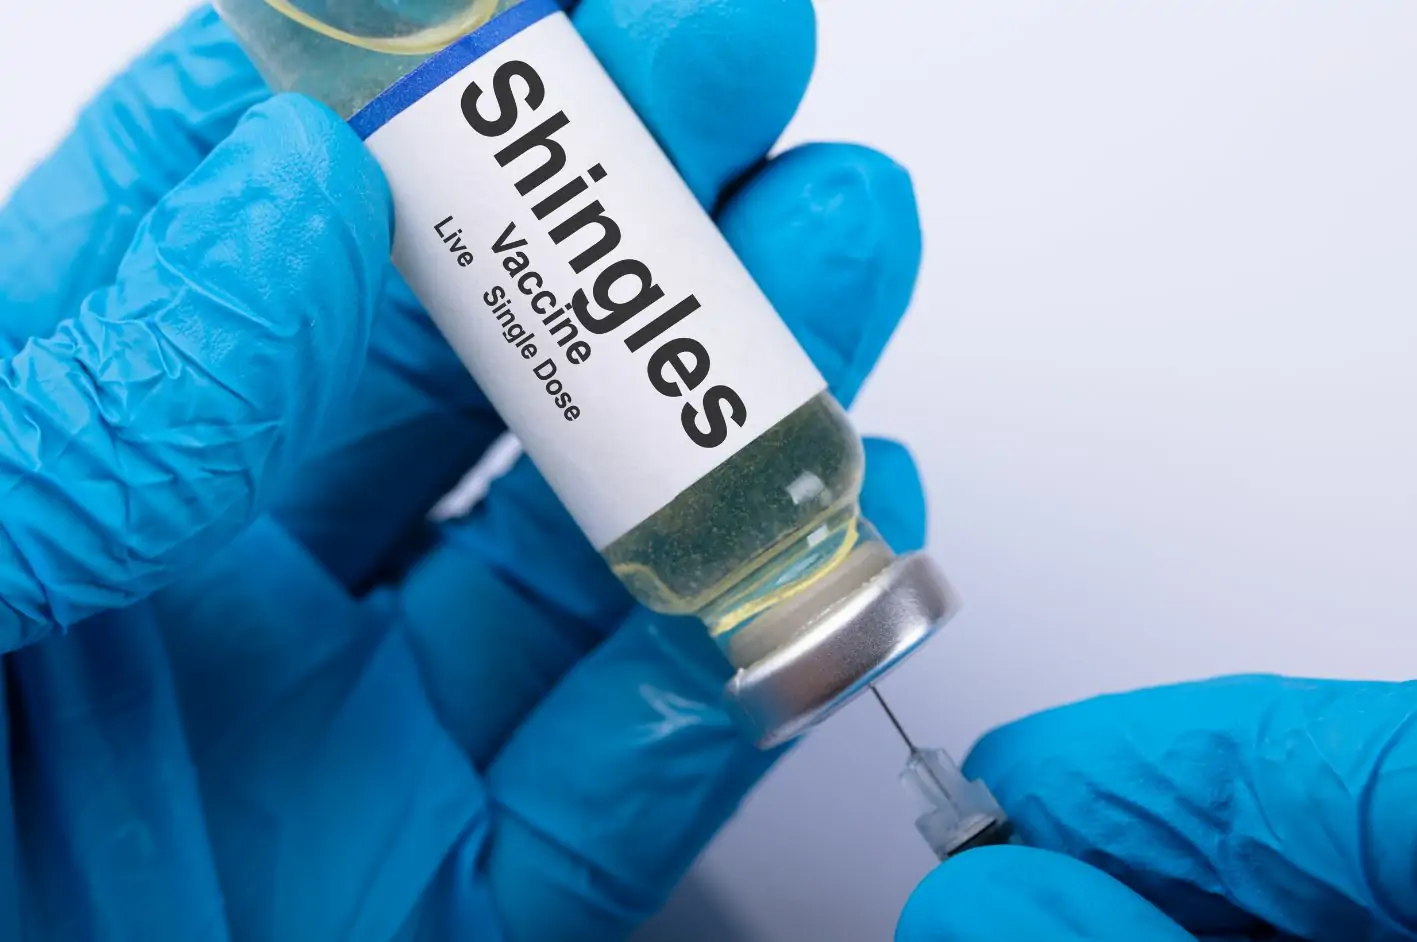 shingles vaccine